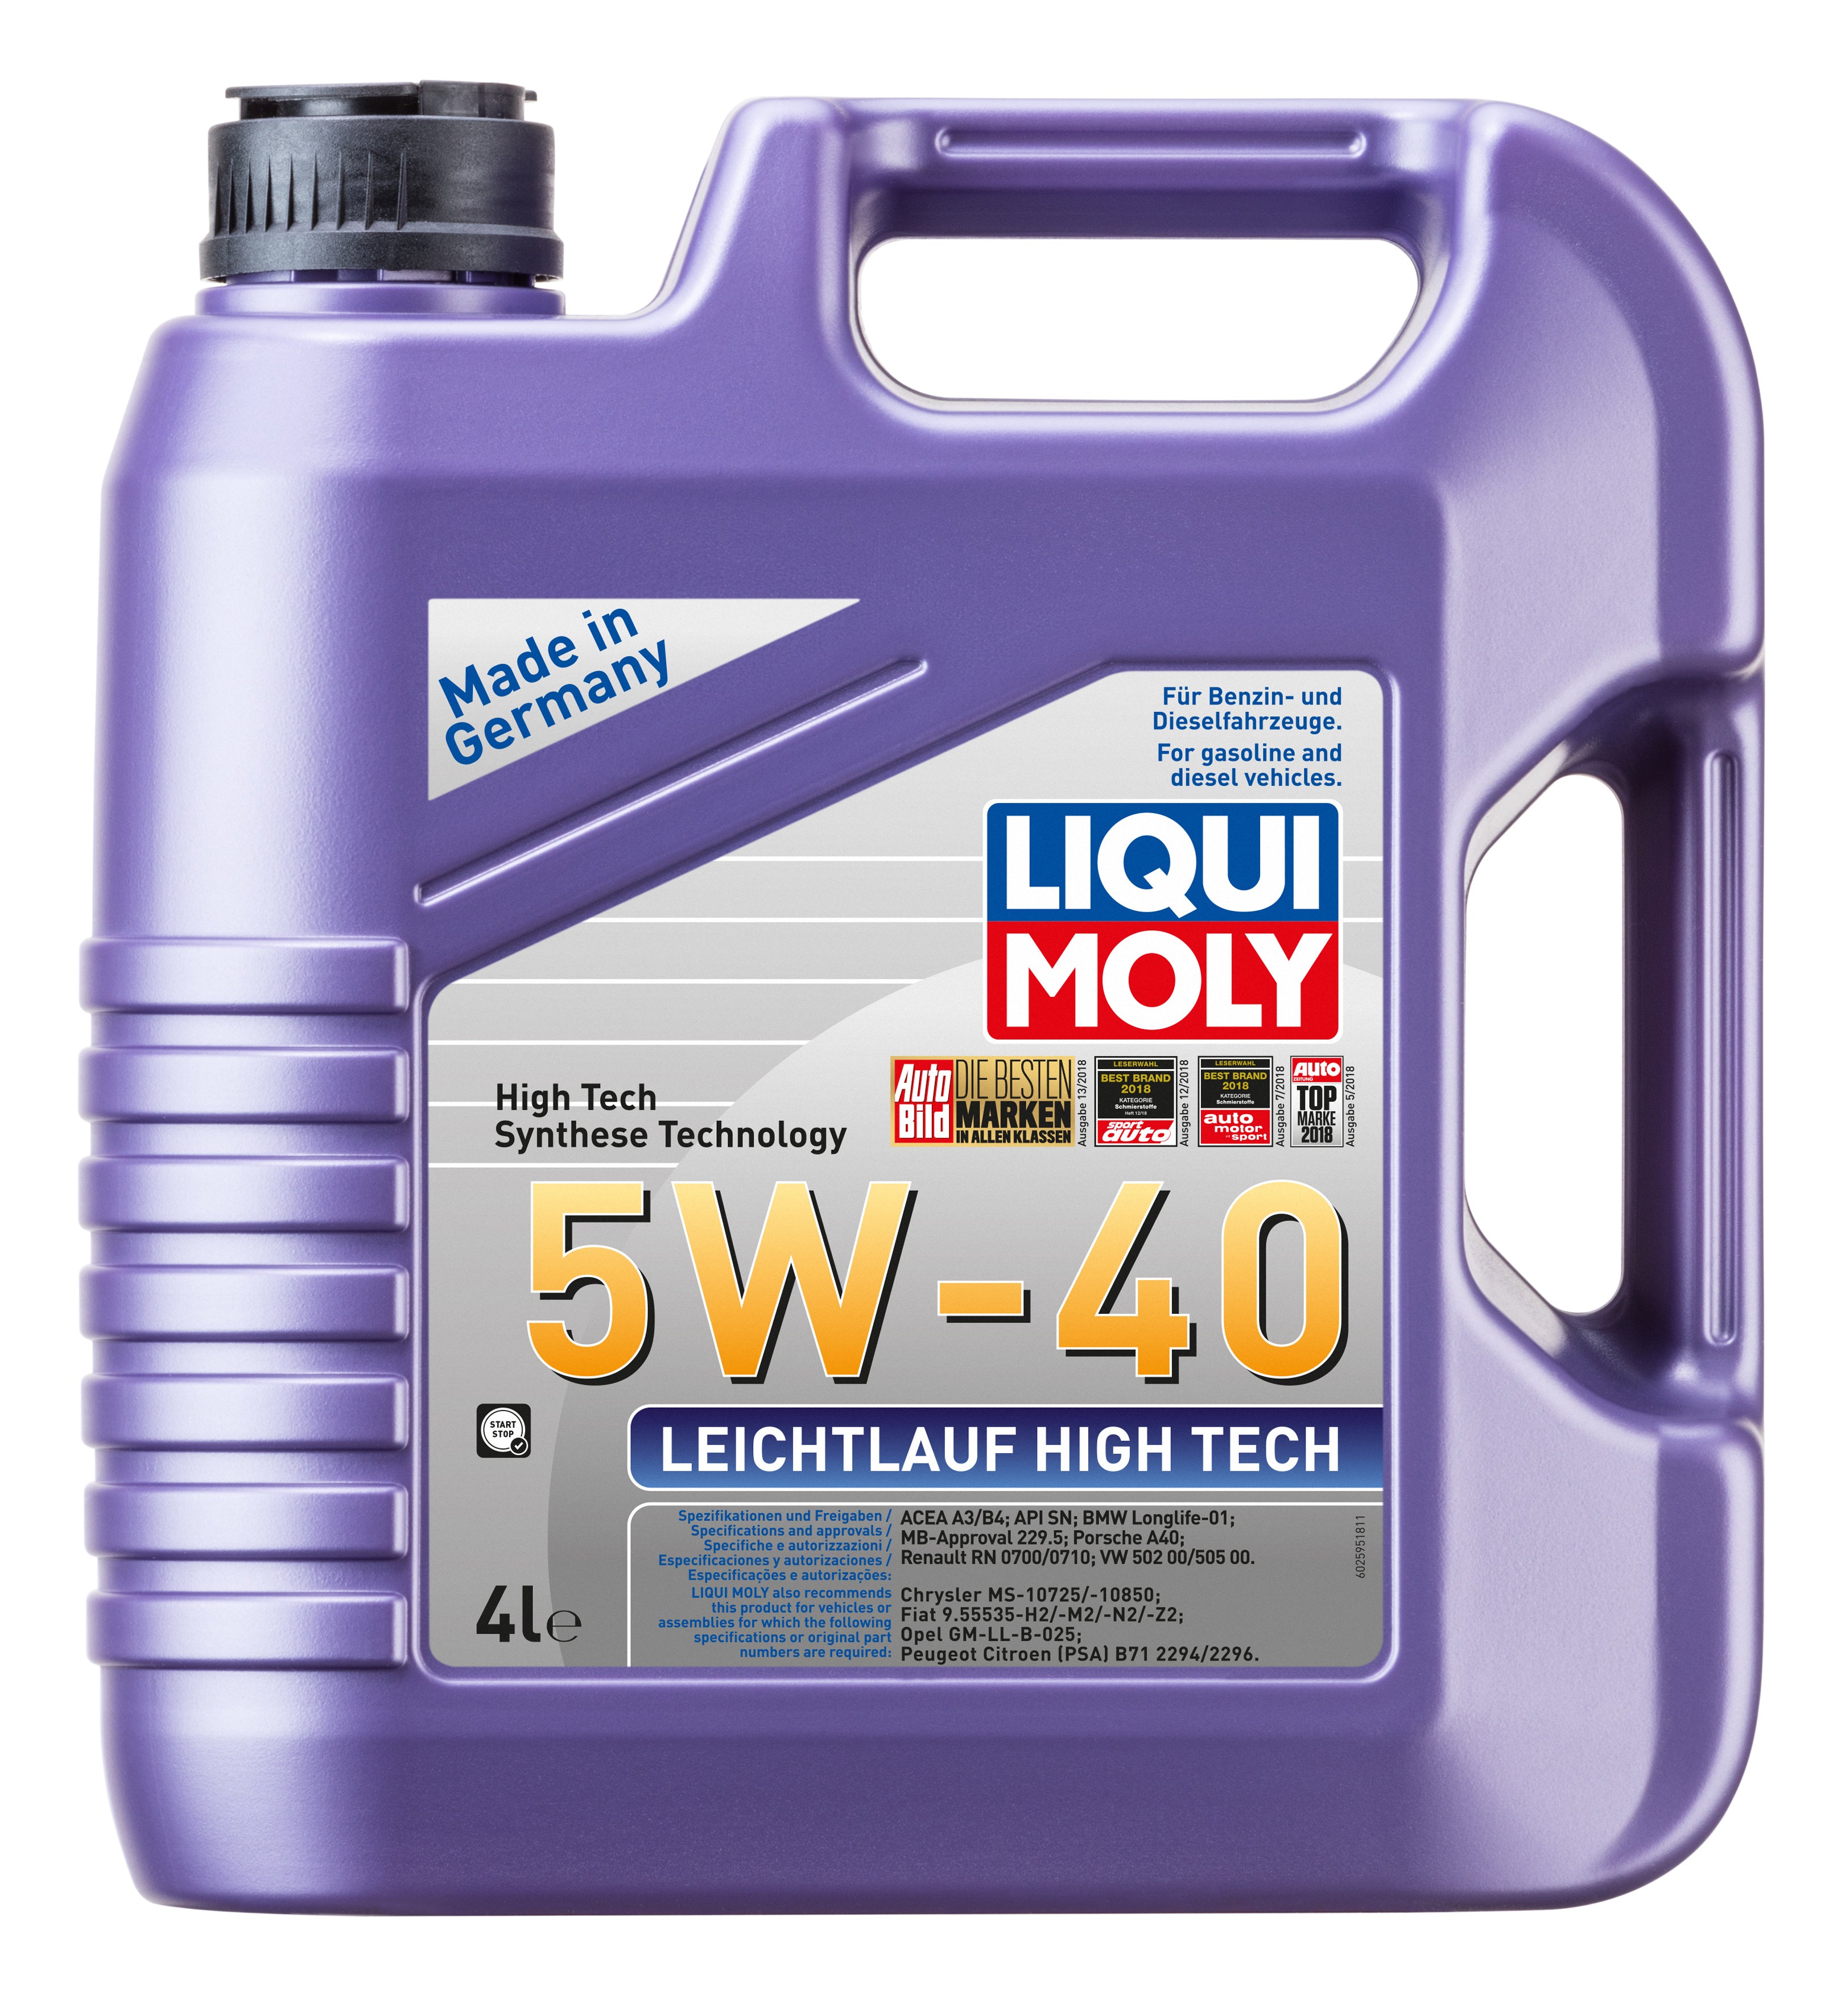 Liqui Moly Leichtlauf High Tech 5W-40 (4 Liter)